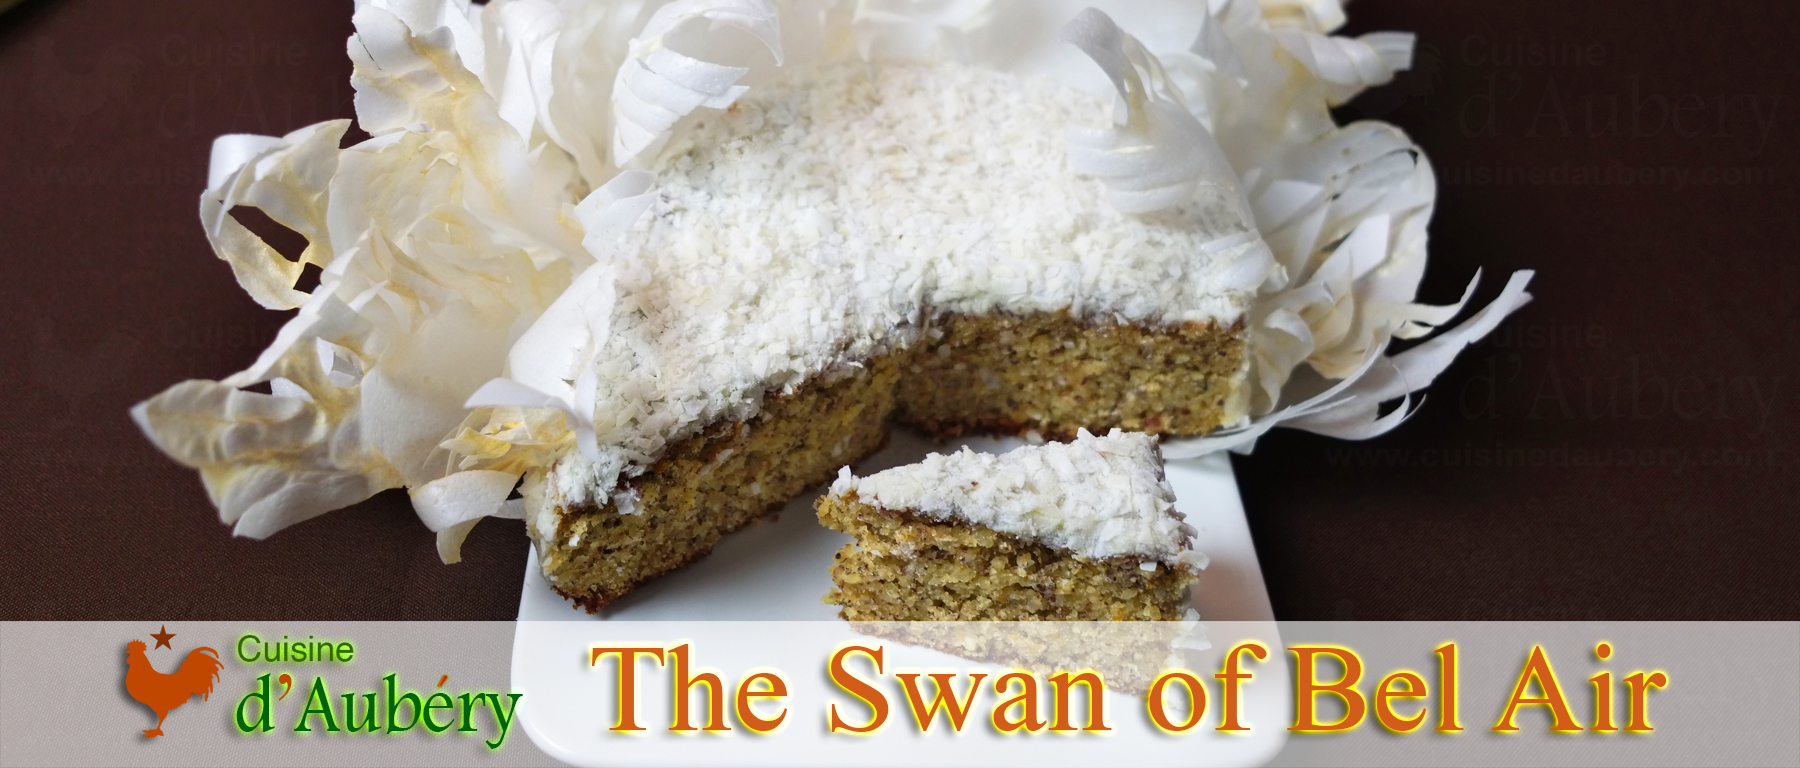 The Swan of Bel-Air (Mandarine Hazelnut for Cyril Lignac) (Le Meilleur Pâtissier)